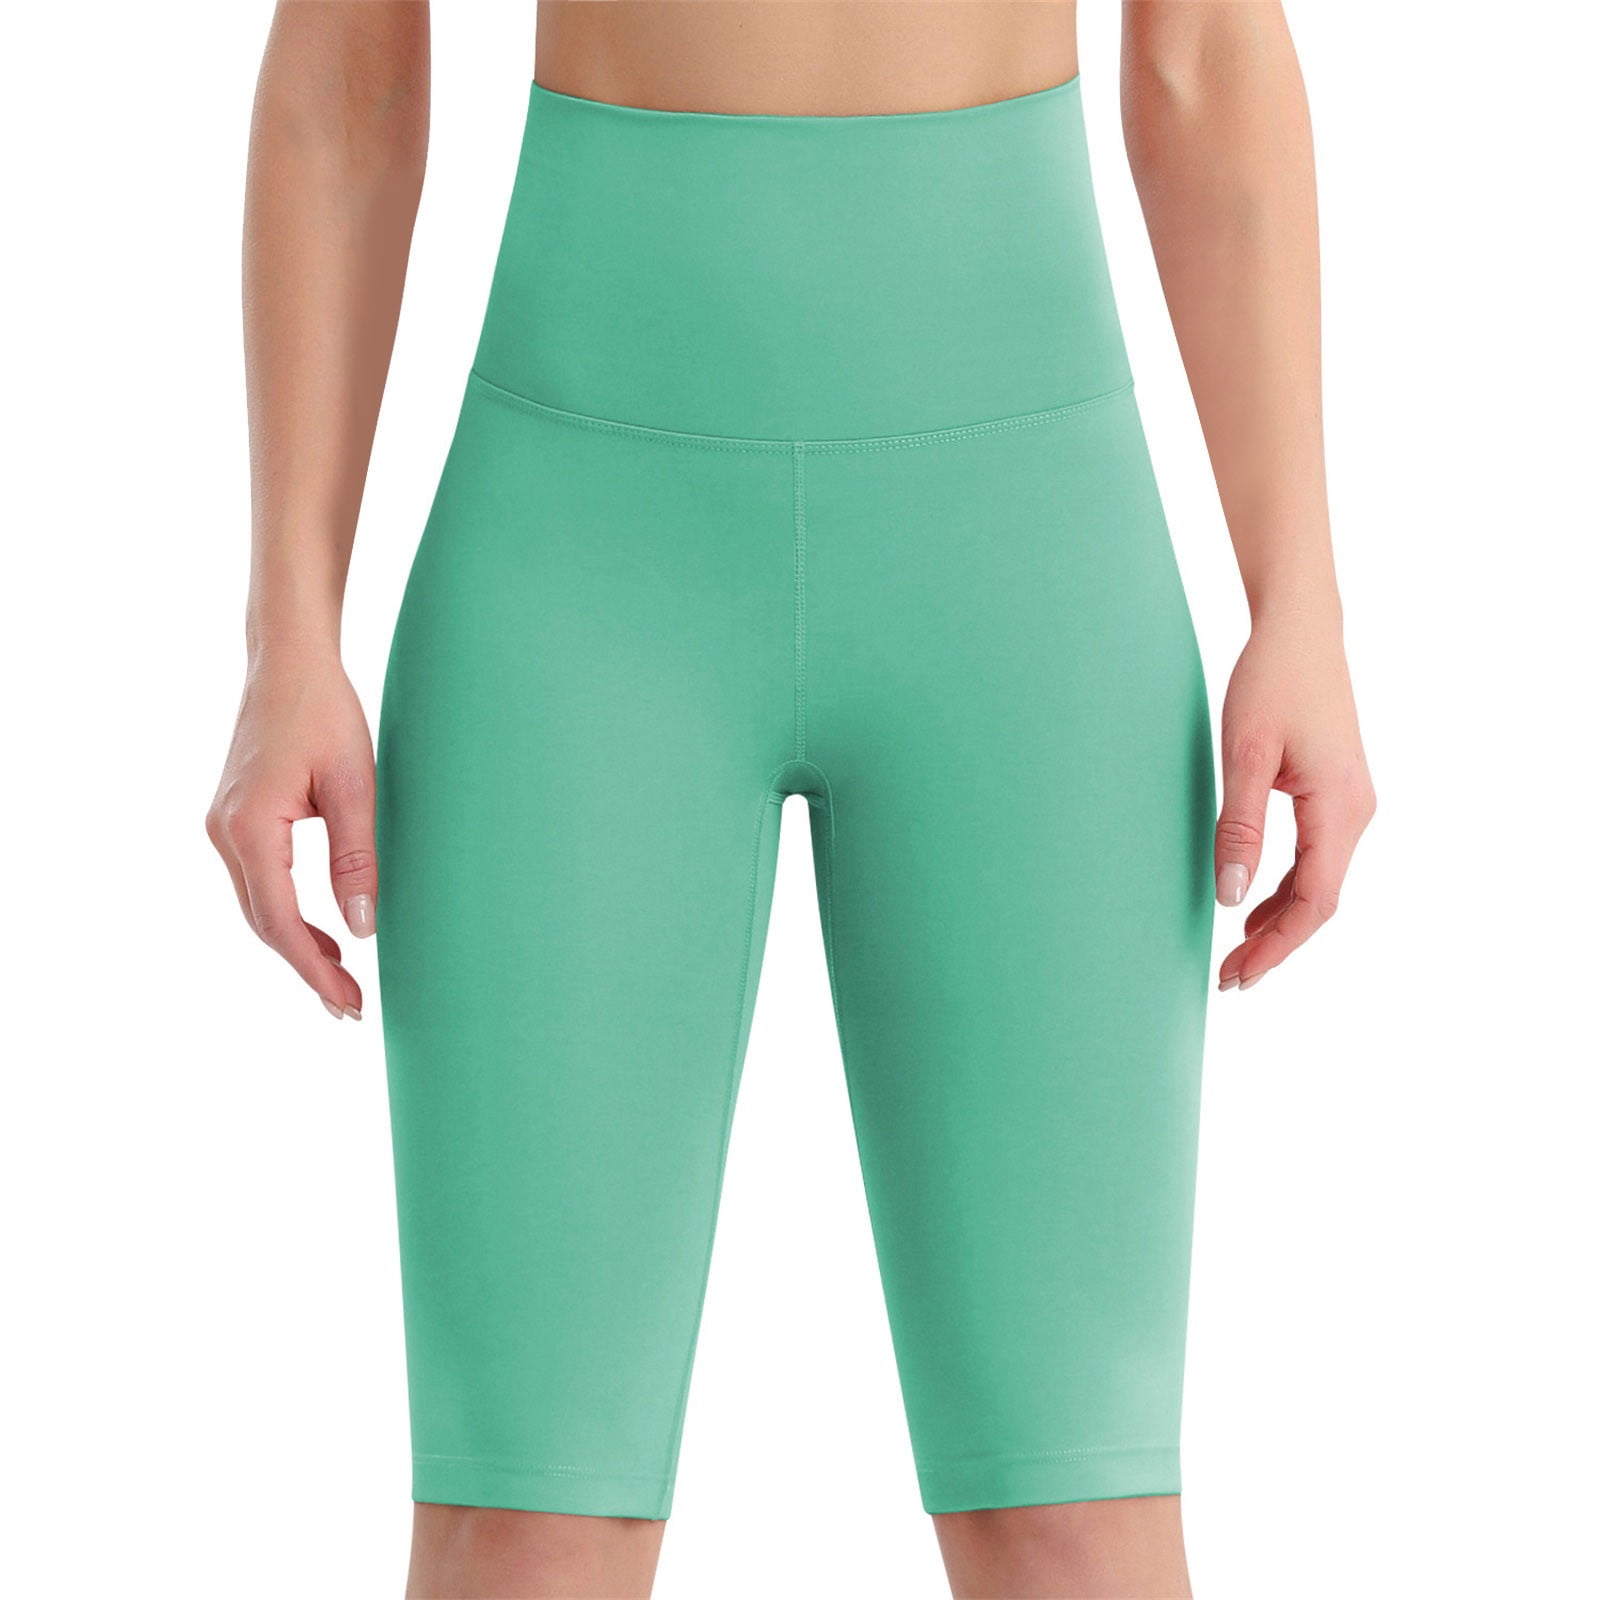 Aayomet Yoga Pants for Women Women High Waist Tight Sports Elastic Solid  Color Fitness Yoga Knee Length Pants,Mint Green XL